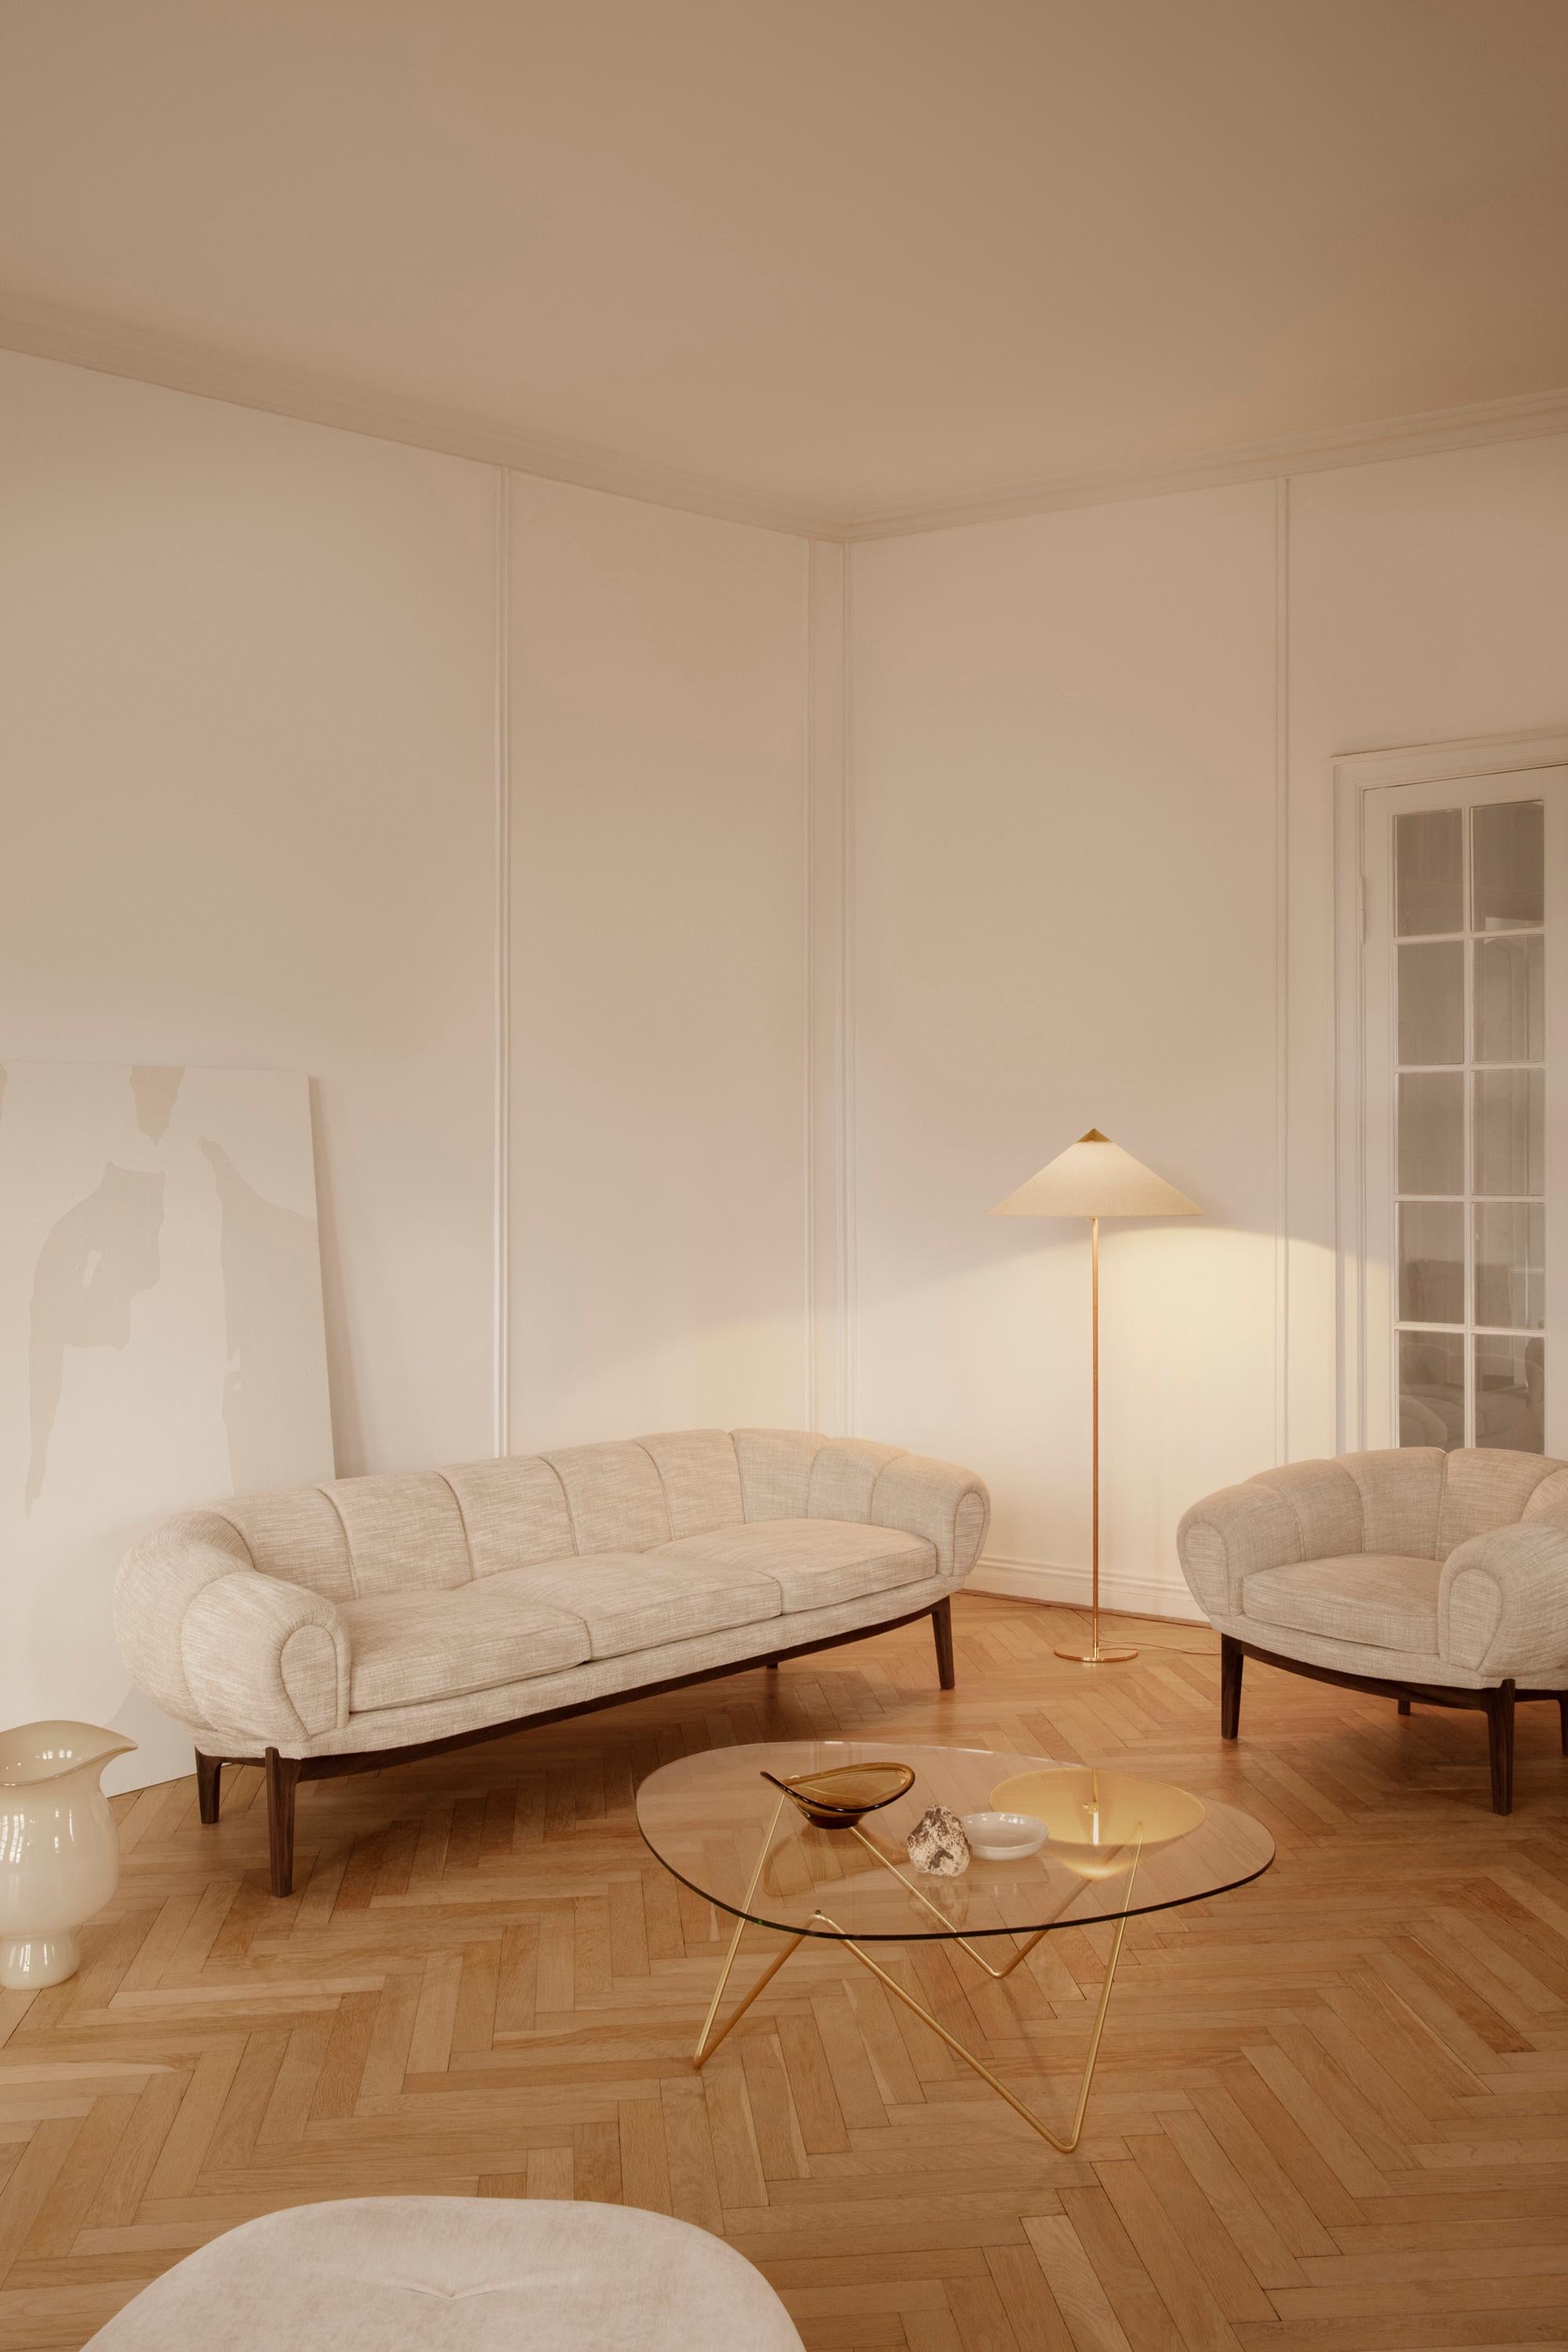 Fabric 'Croissant' Sofa by Illum Wikkelsø for GUBI with Oak Legs For Sale 1